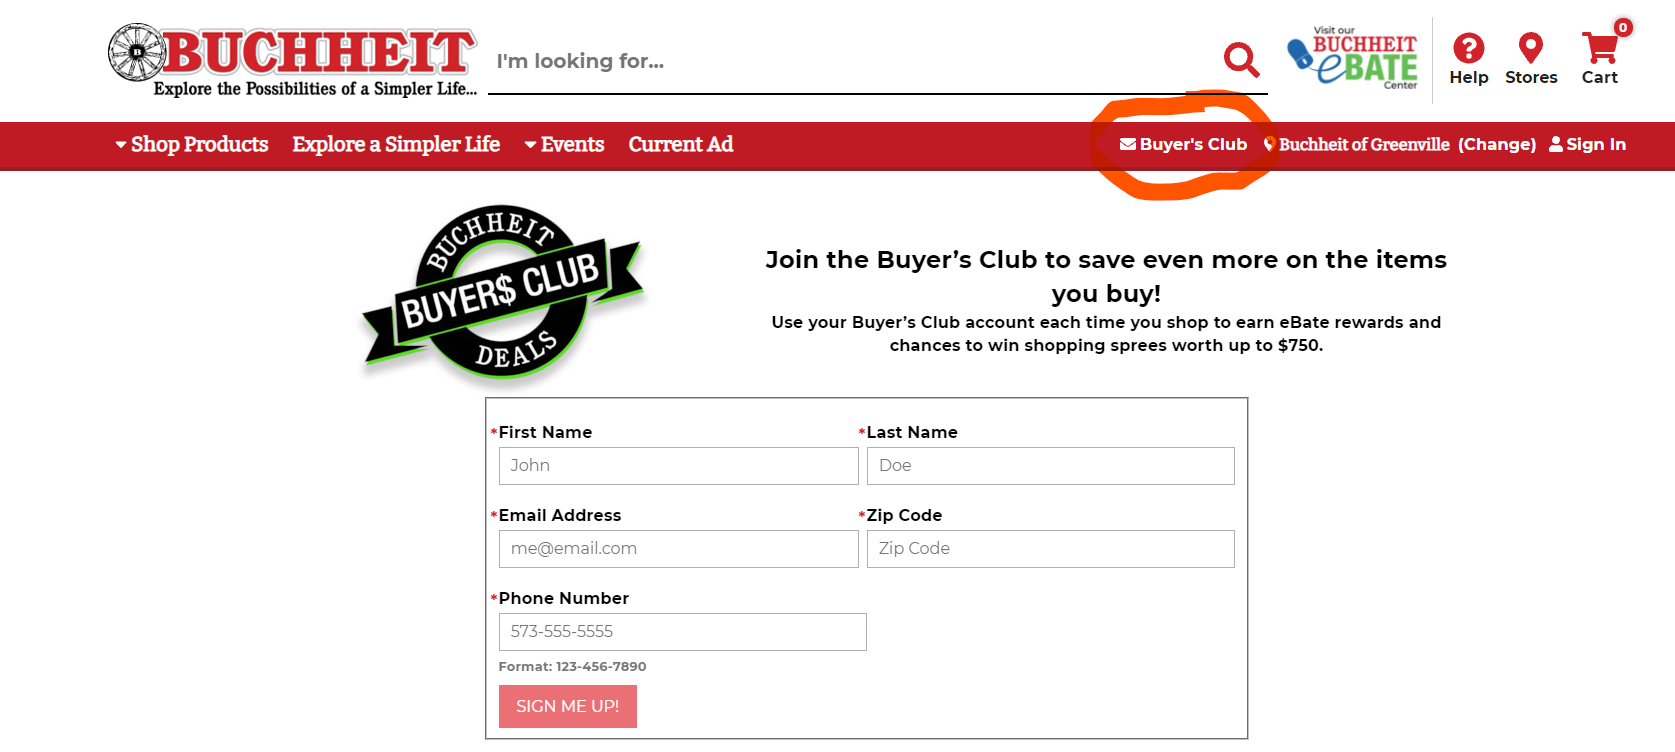 Buchheit Buyers Club Rebate Application Online